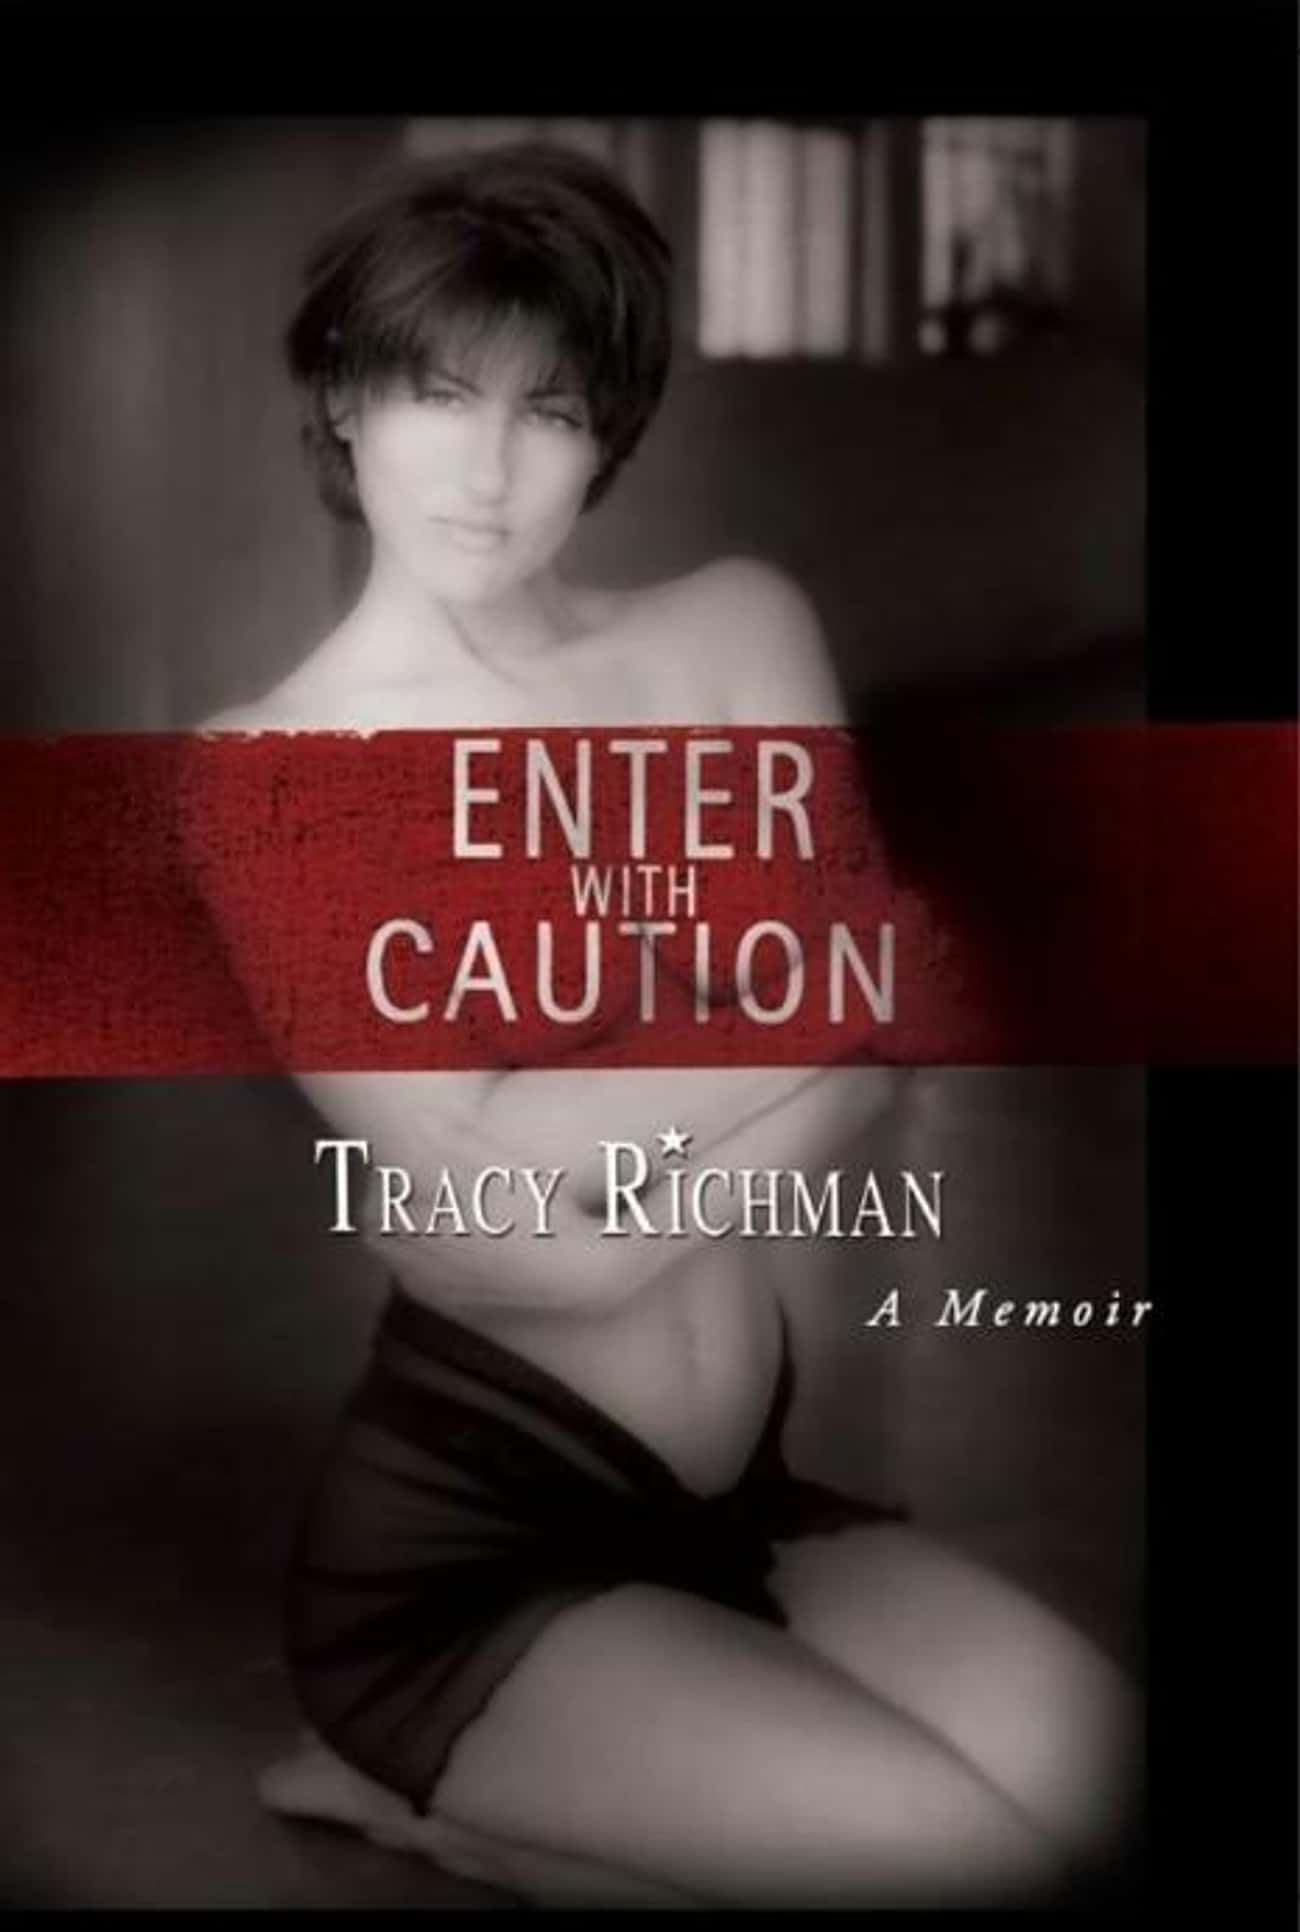 Tracy Richman